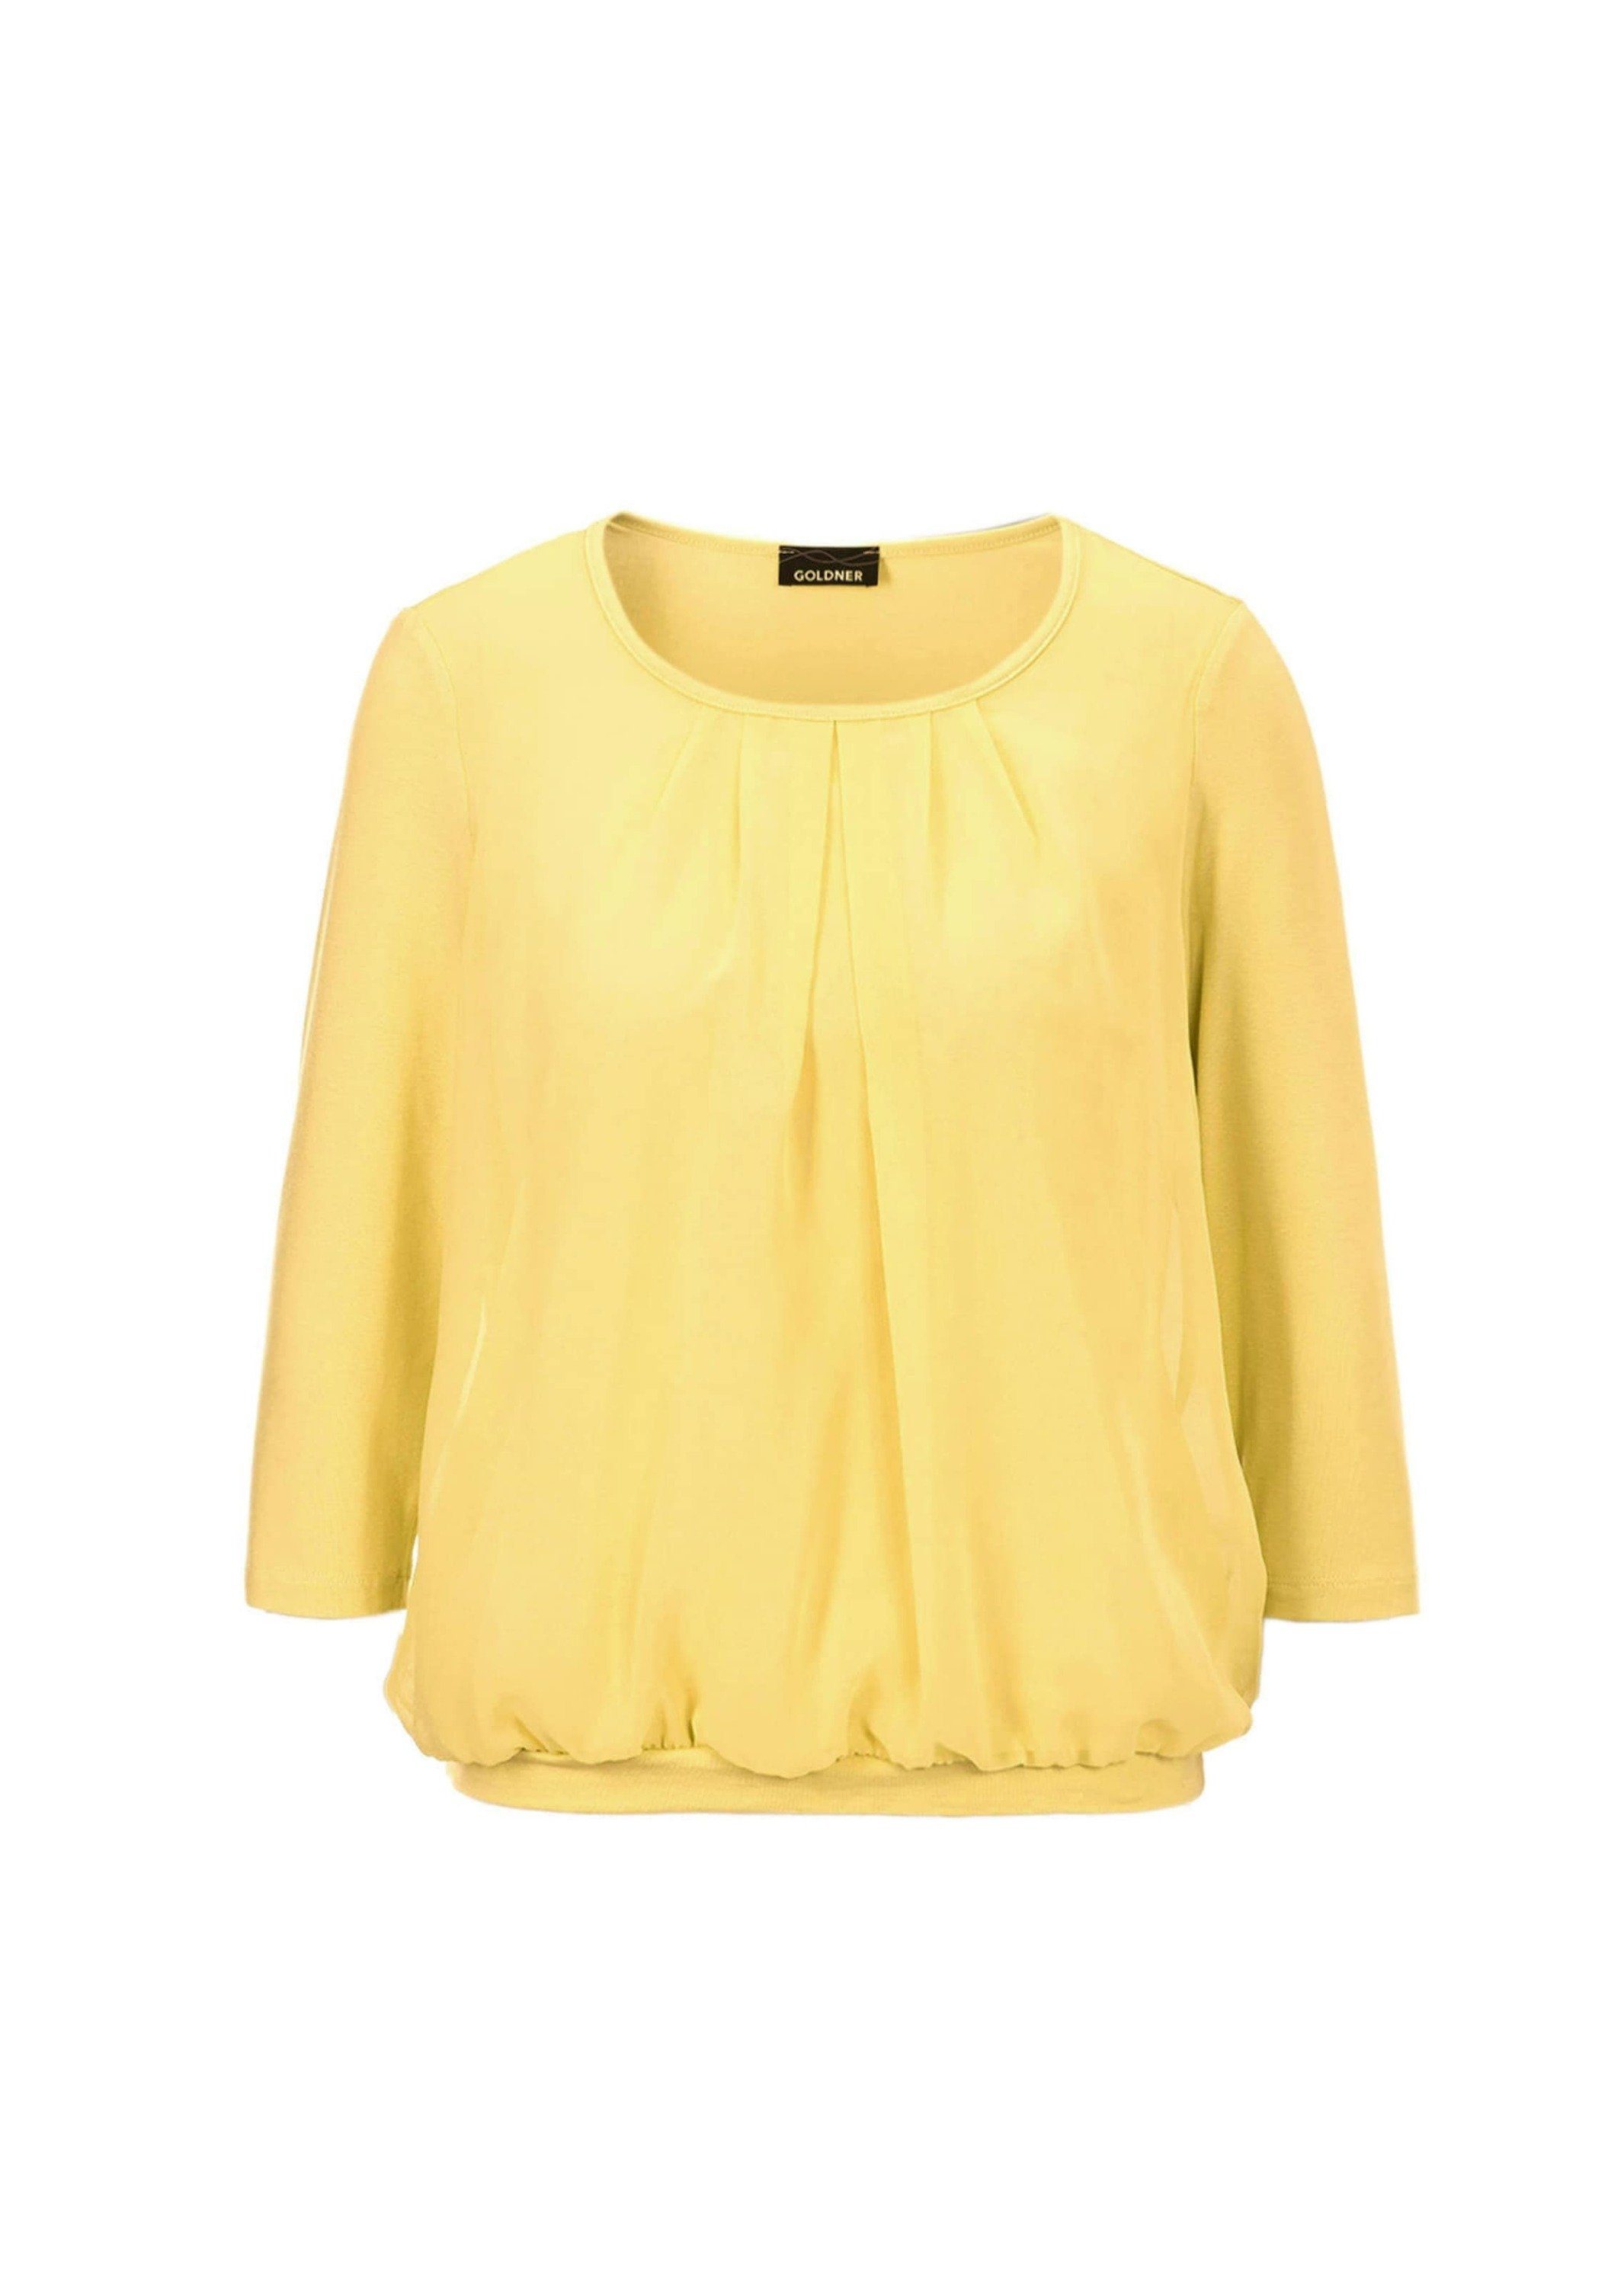 GOLDNER Kurzarmbluse Gepflegtes in gelb Shirt Blusen-Optik eleganter